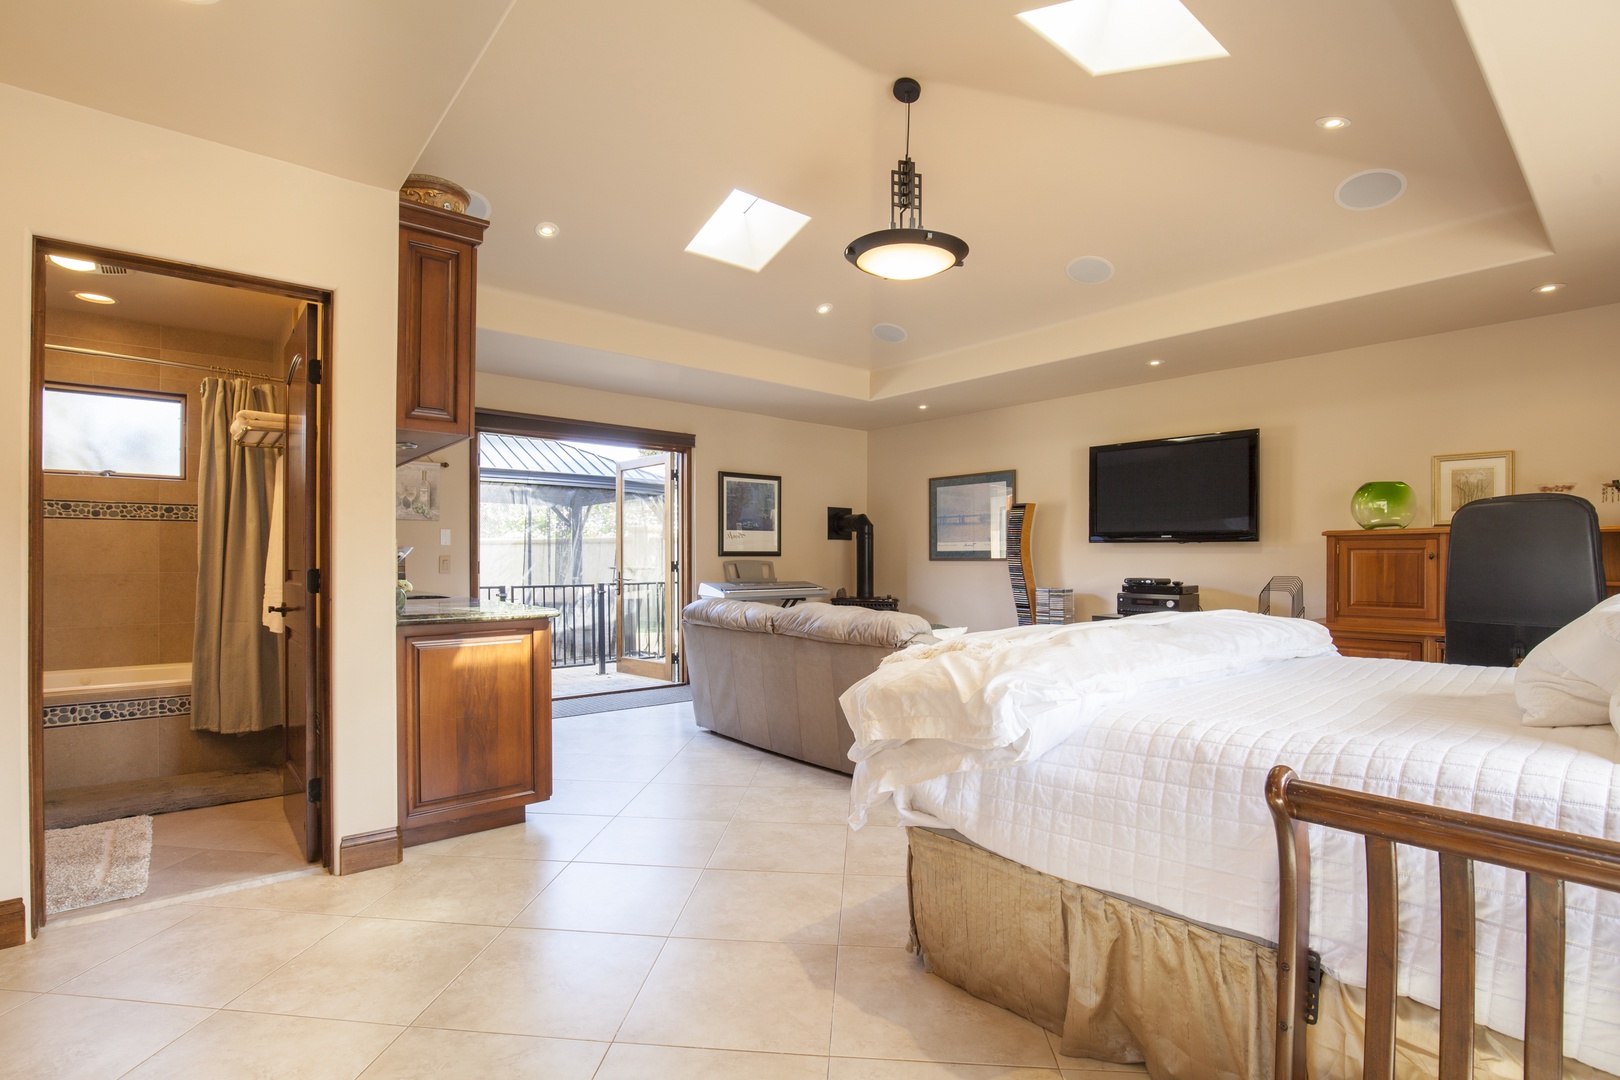 La Jolla Vacation Rentals, Jewel Above La Jolla Shores - The second suite includes a large living space